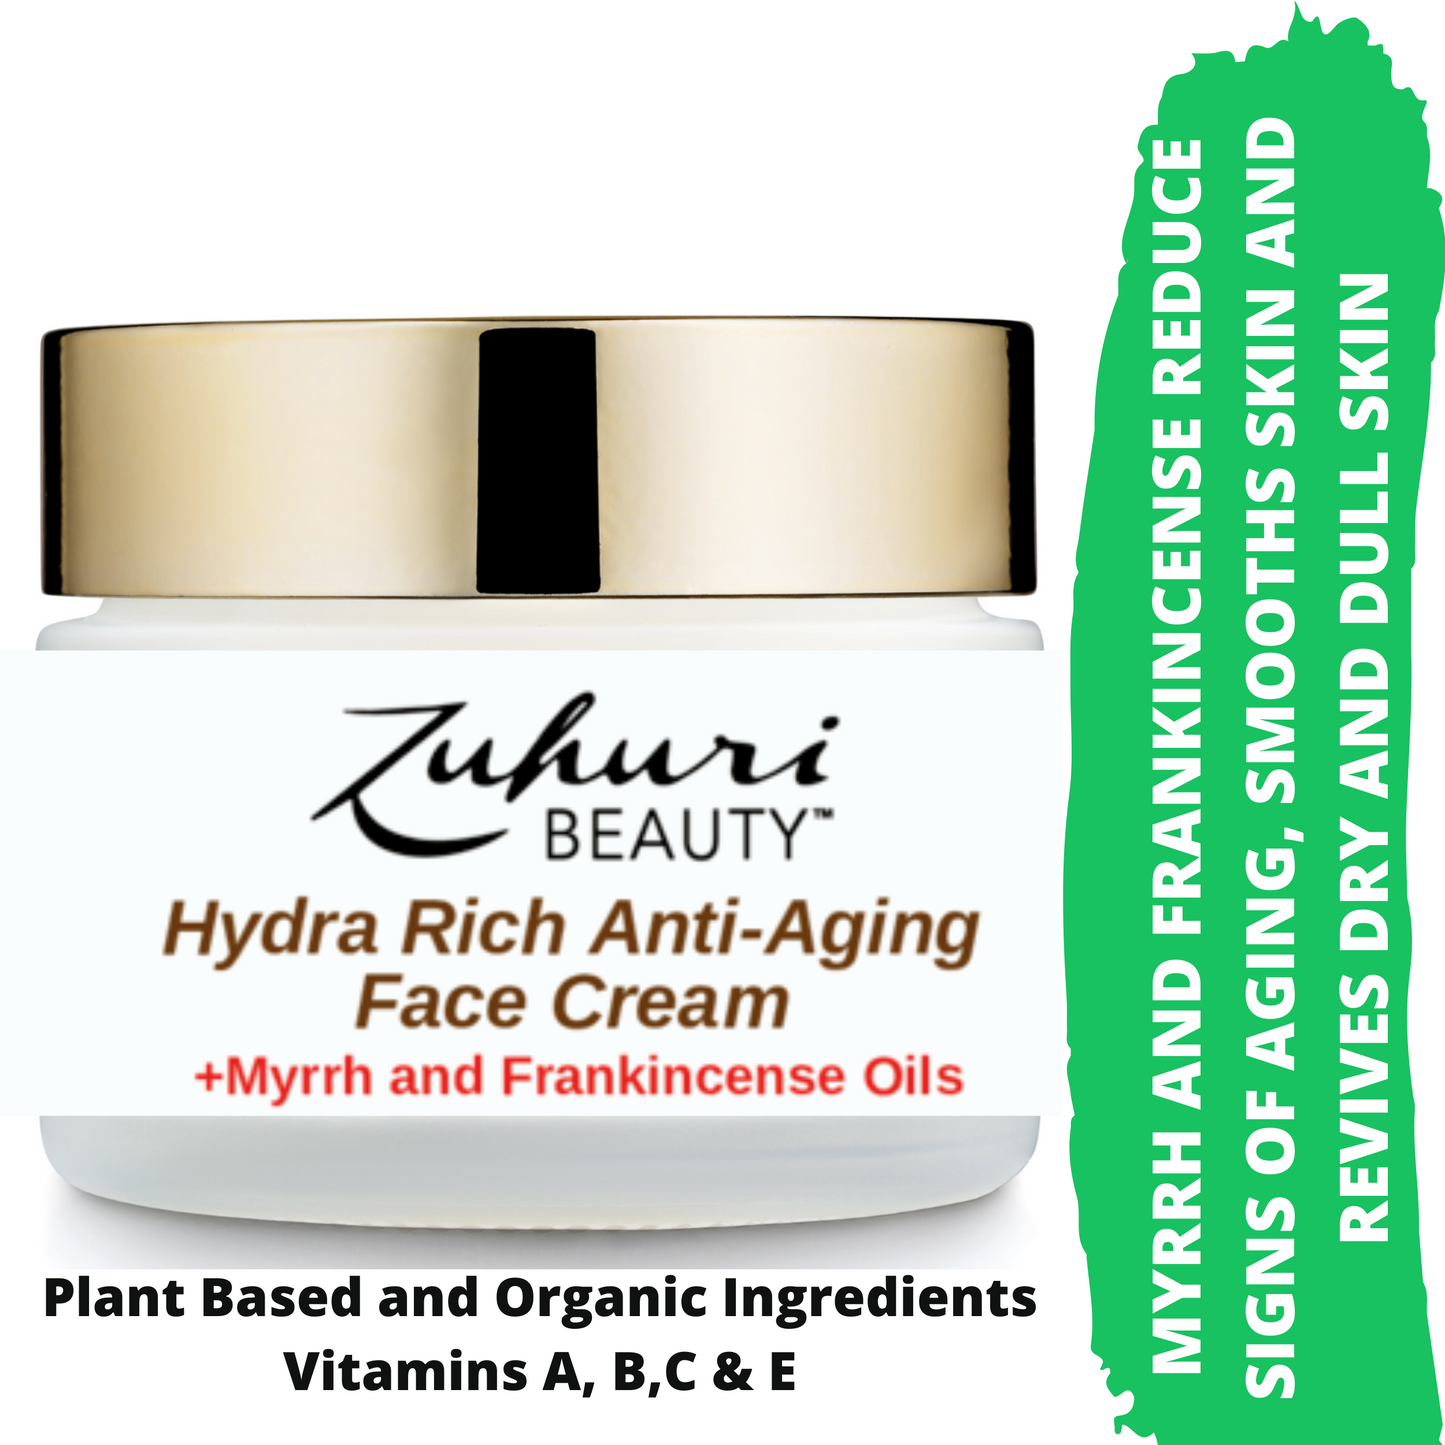 
                  
                    Zuhuri Beauty Hydra Rich Anti-Aging Face Cream with Myrrh and Frankincense Oils
                  
                